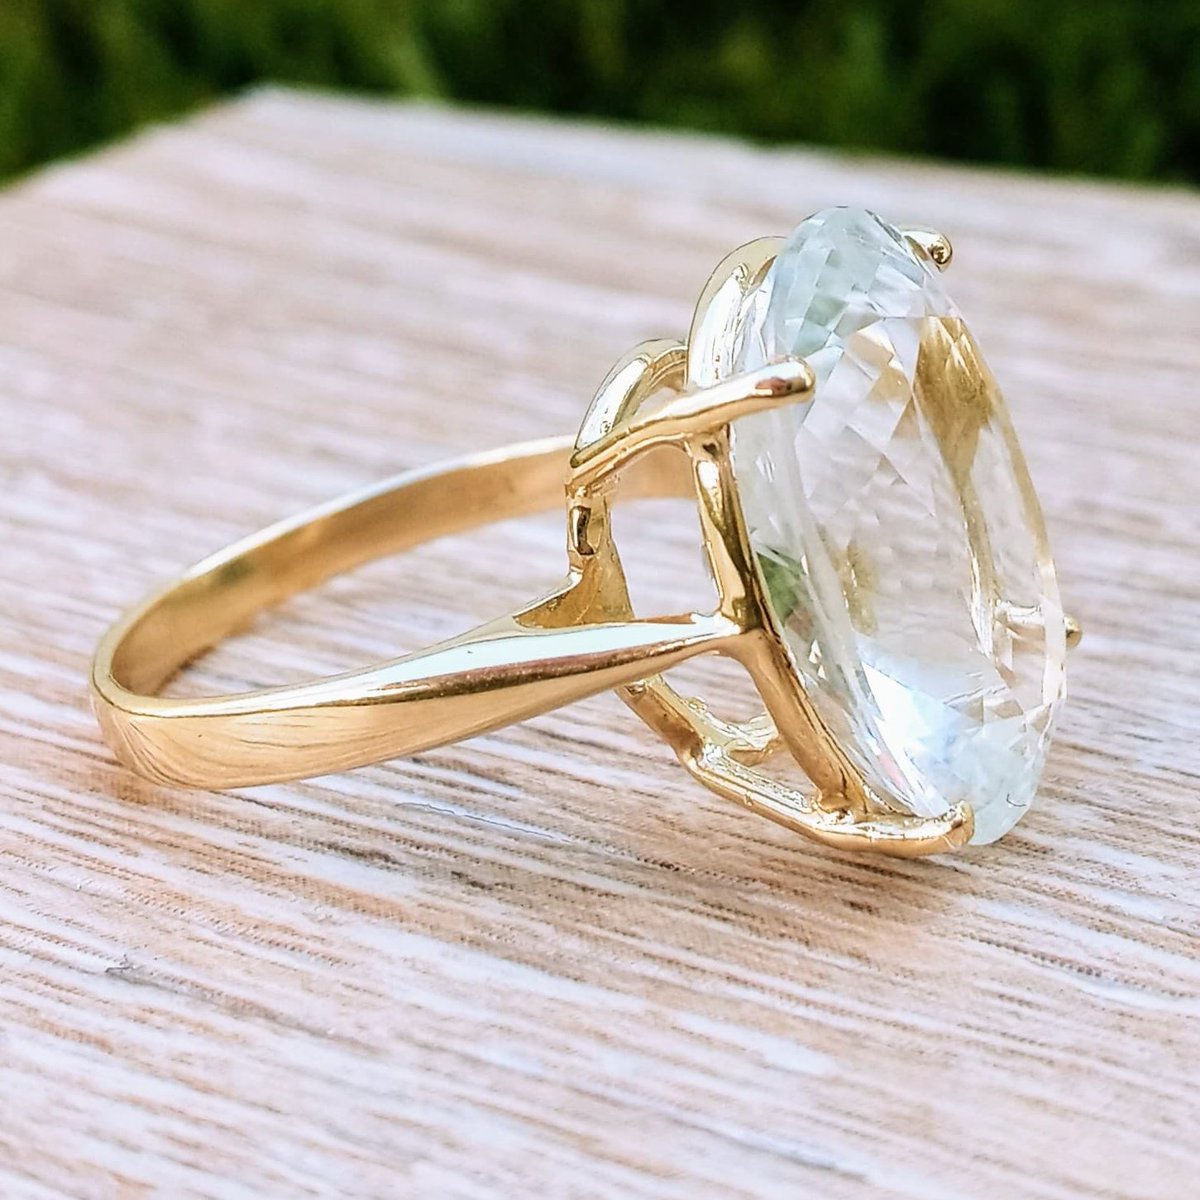 White Gold Topaz Ring by JulLuxJewelry etsy.me/3WvfEEn via @Etsy #jewelrygift #jewelrypresent #jewelry #goldjewelry #goldrings #statementrings #giftideas #presentideas #birthdaygift #loveyou #gemstonejewelry #gemstonrings #onlineshopping #whitetopaz #whitetopazjewelry